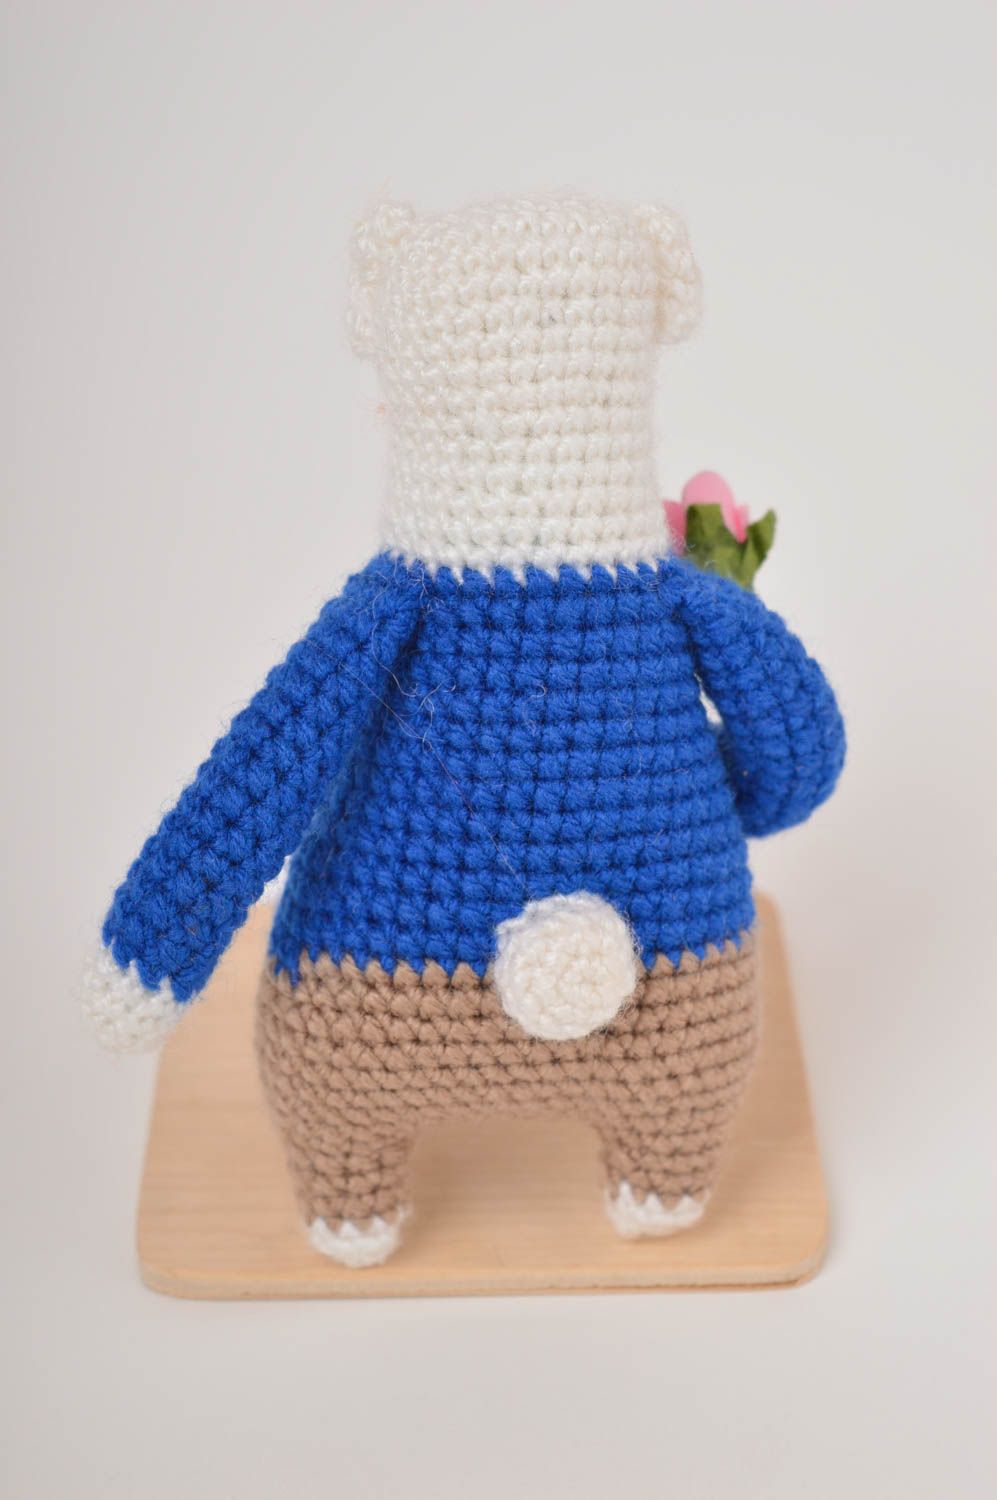 Hand-crocheted bear toy handmade crocheted toy for kids stylish nursery decor photo 3